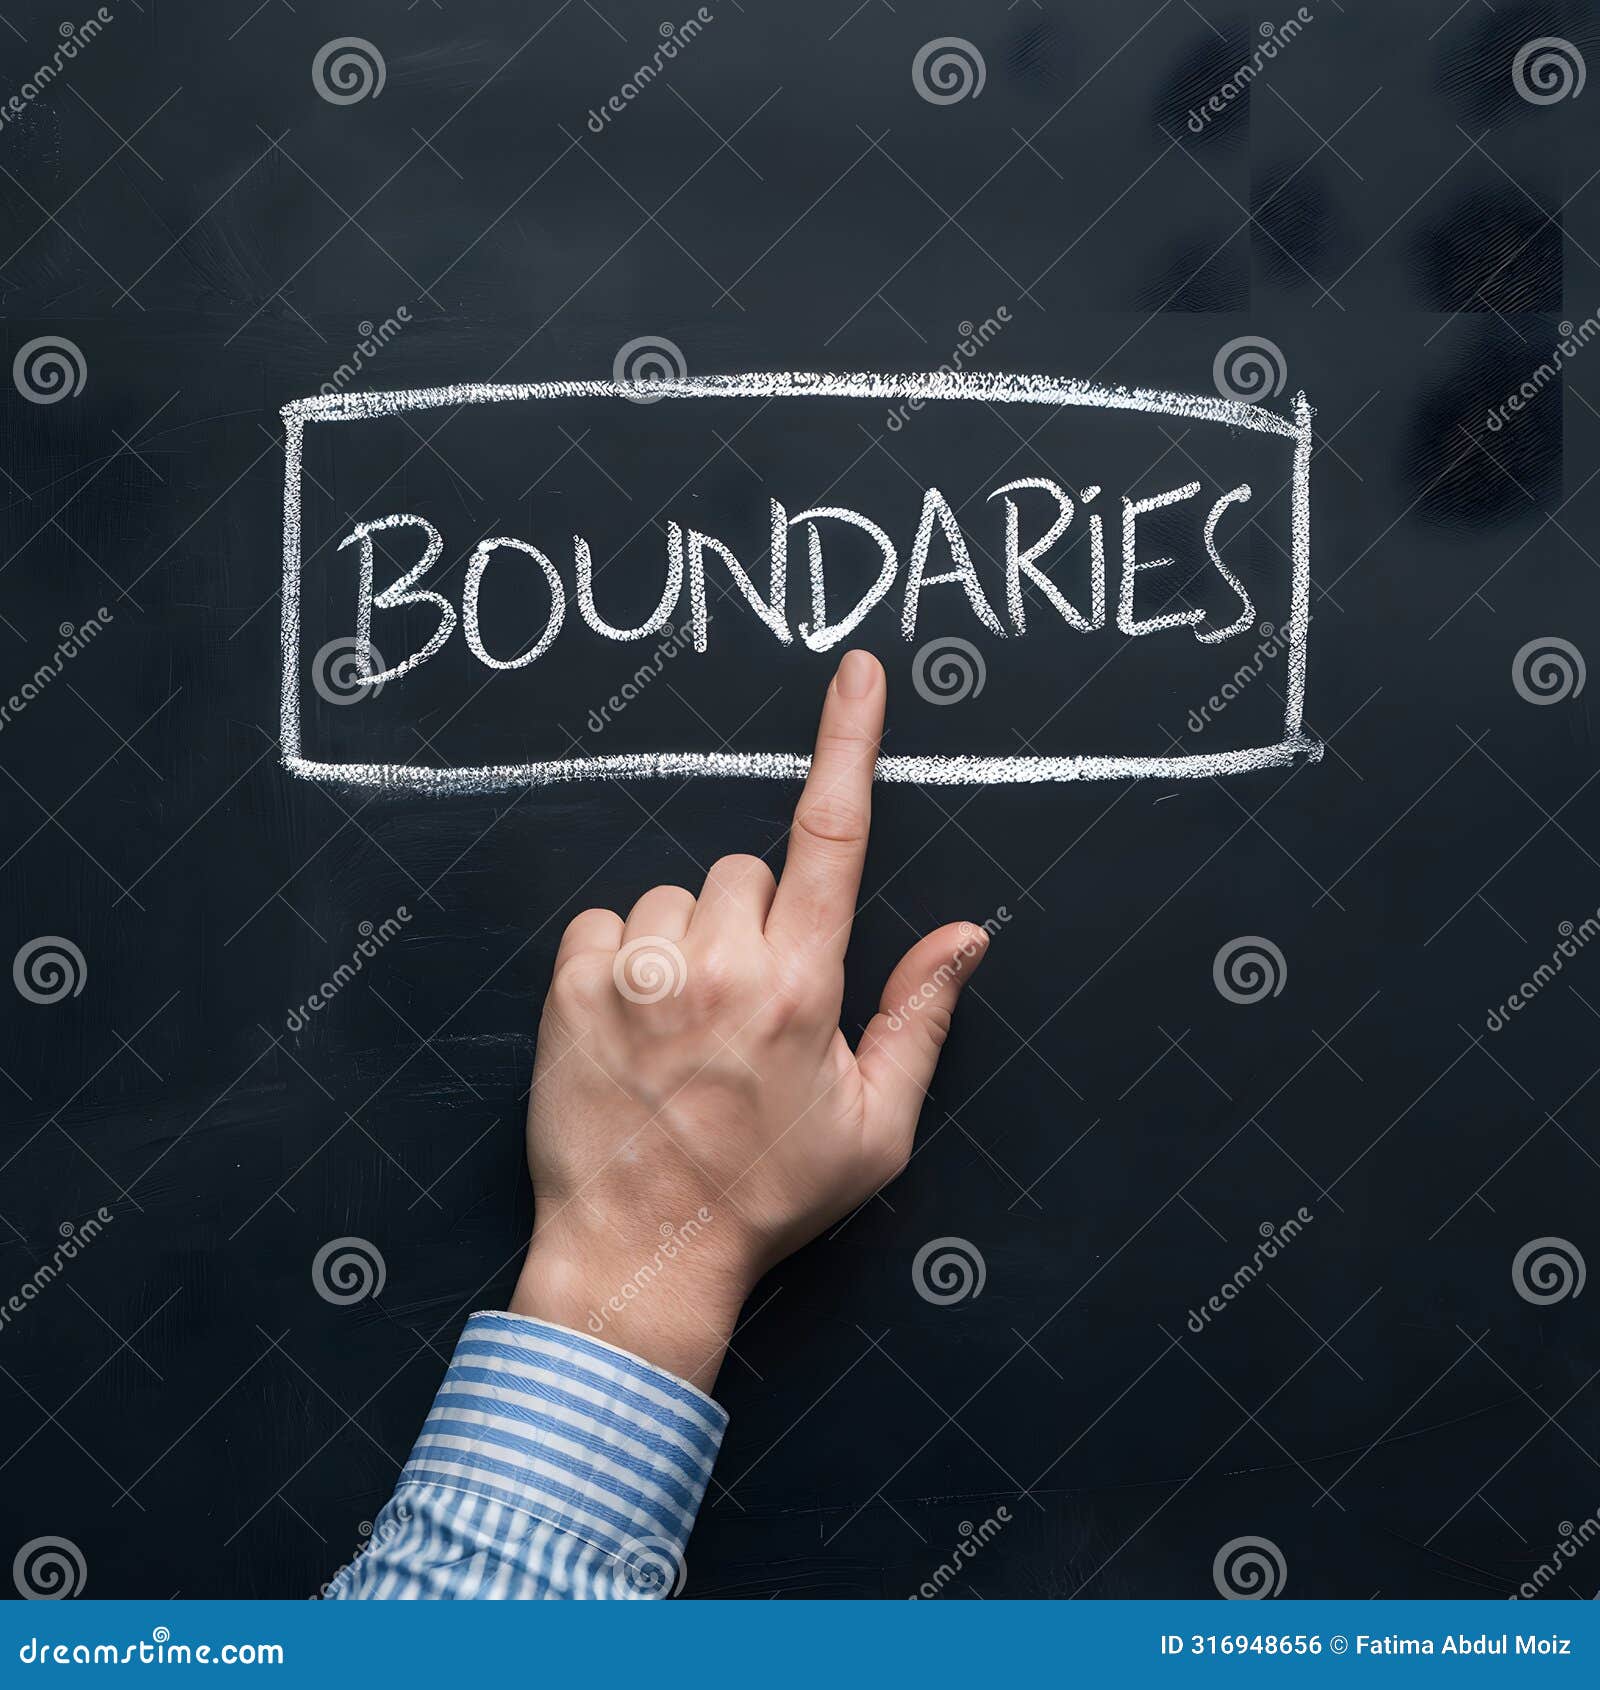 hand points to set boundaries on blackboard, emphasizing limits